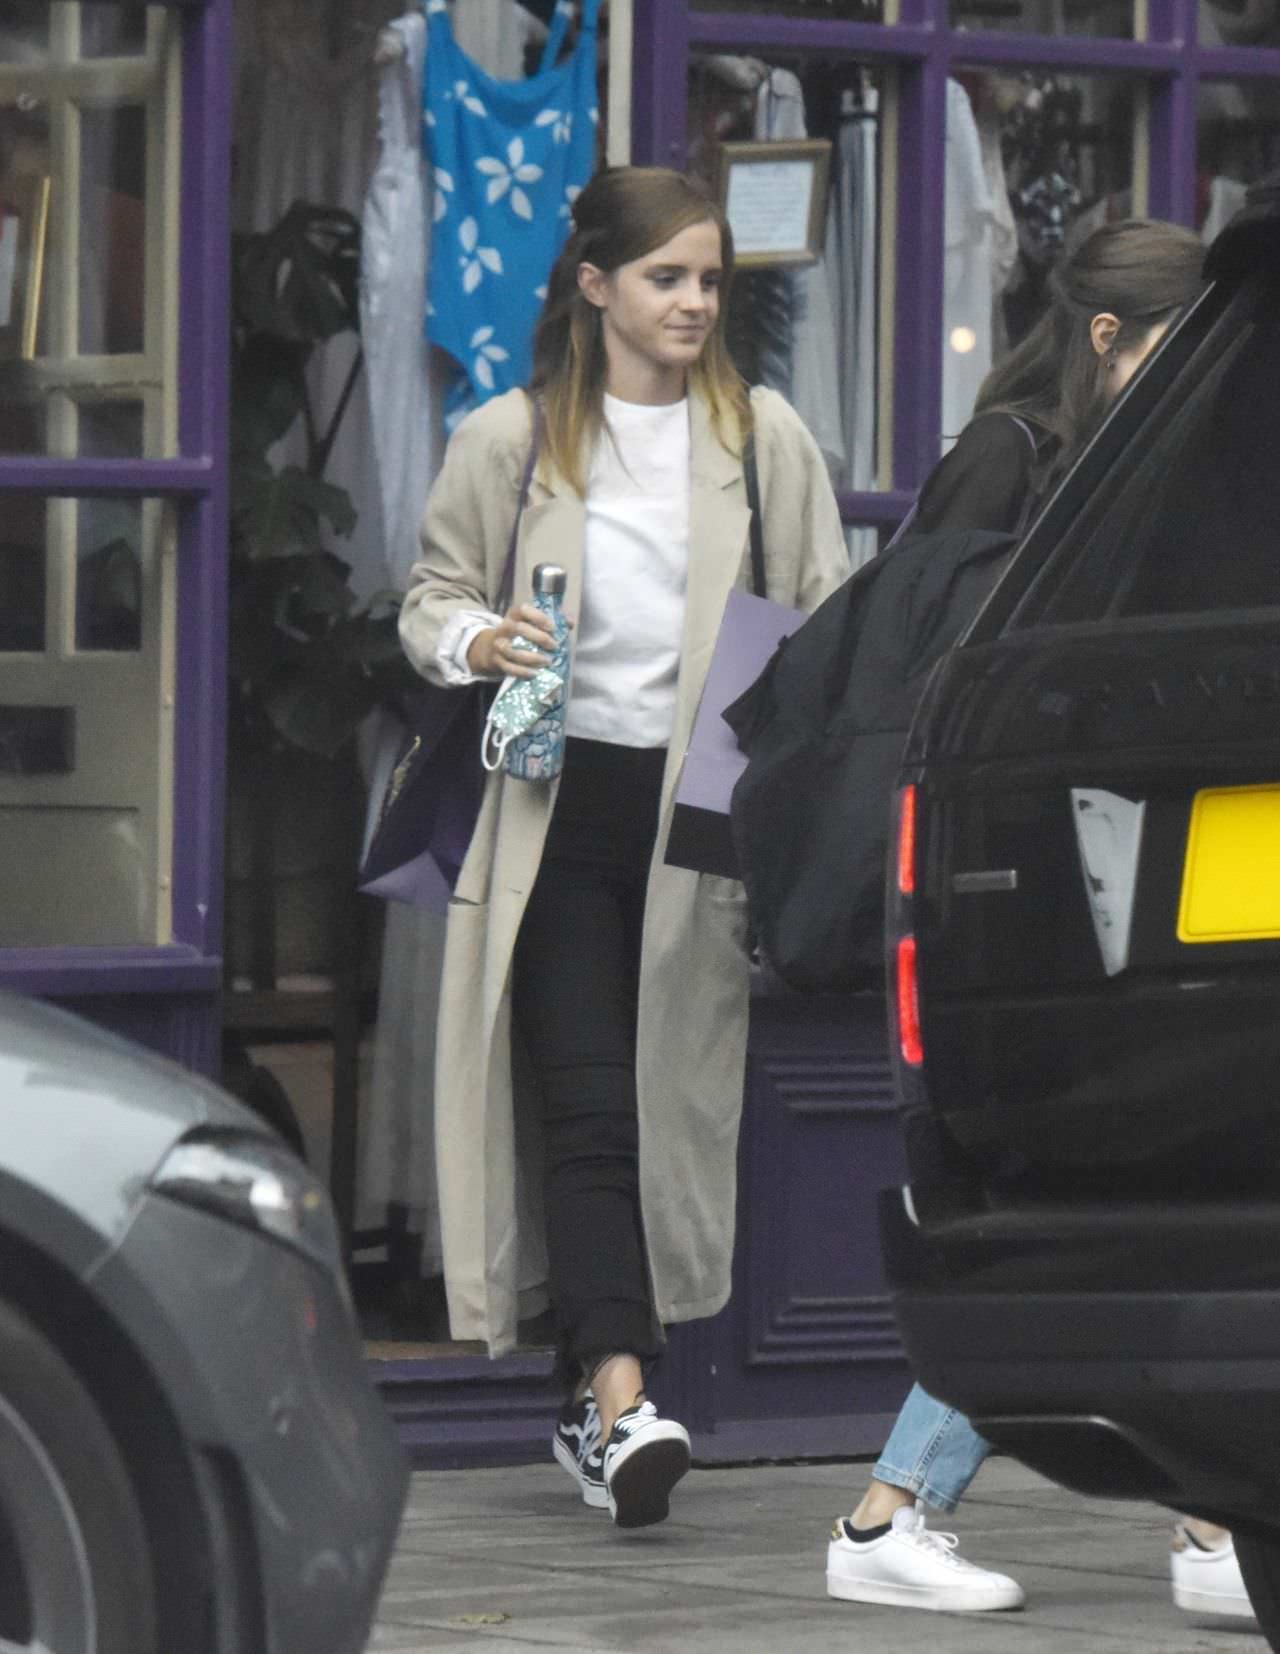 Emma Watson Fashions a Stylish Figure in a Stone Trench Coat